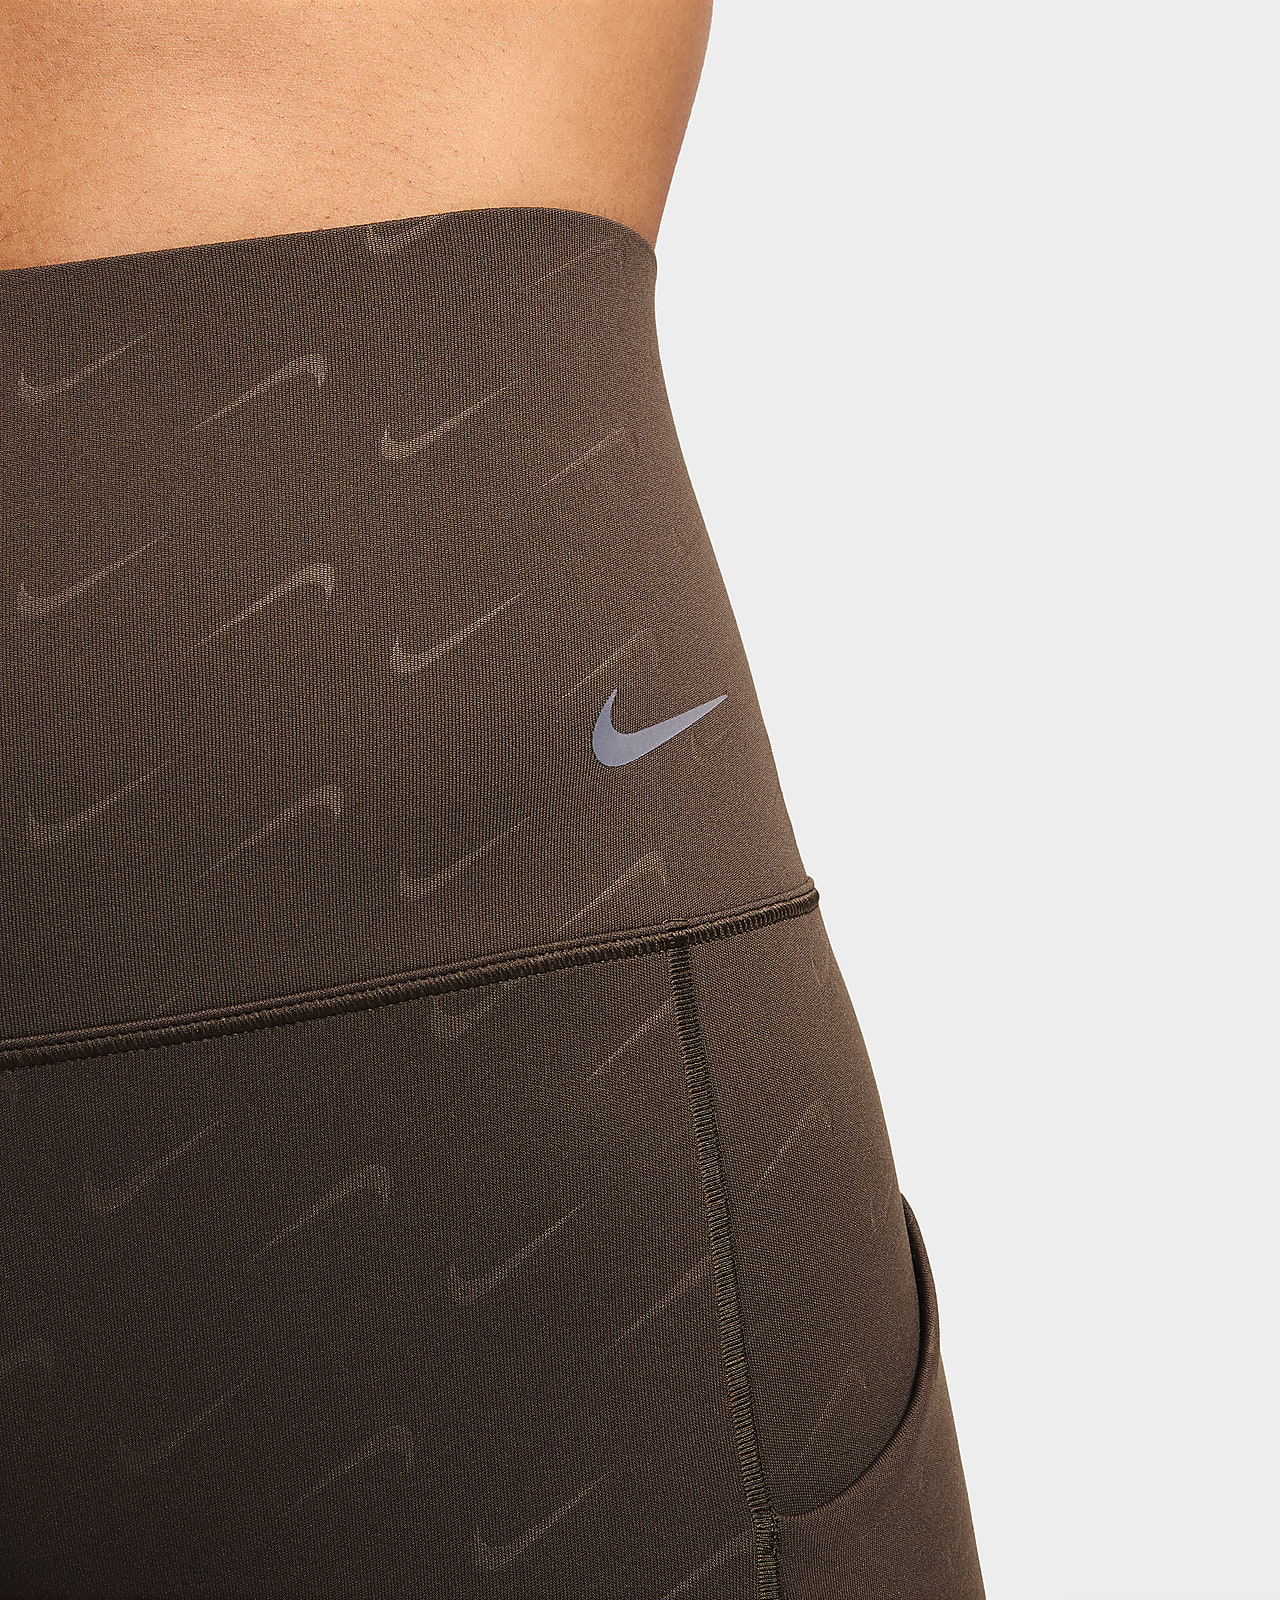 Nike Universa Medium Support High Waist 7/8 Leggings in Violet Dust/Black